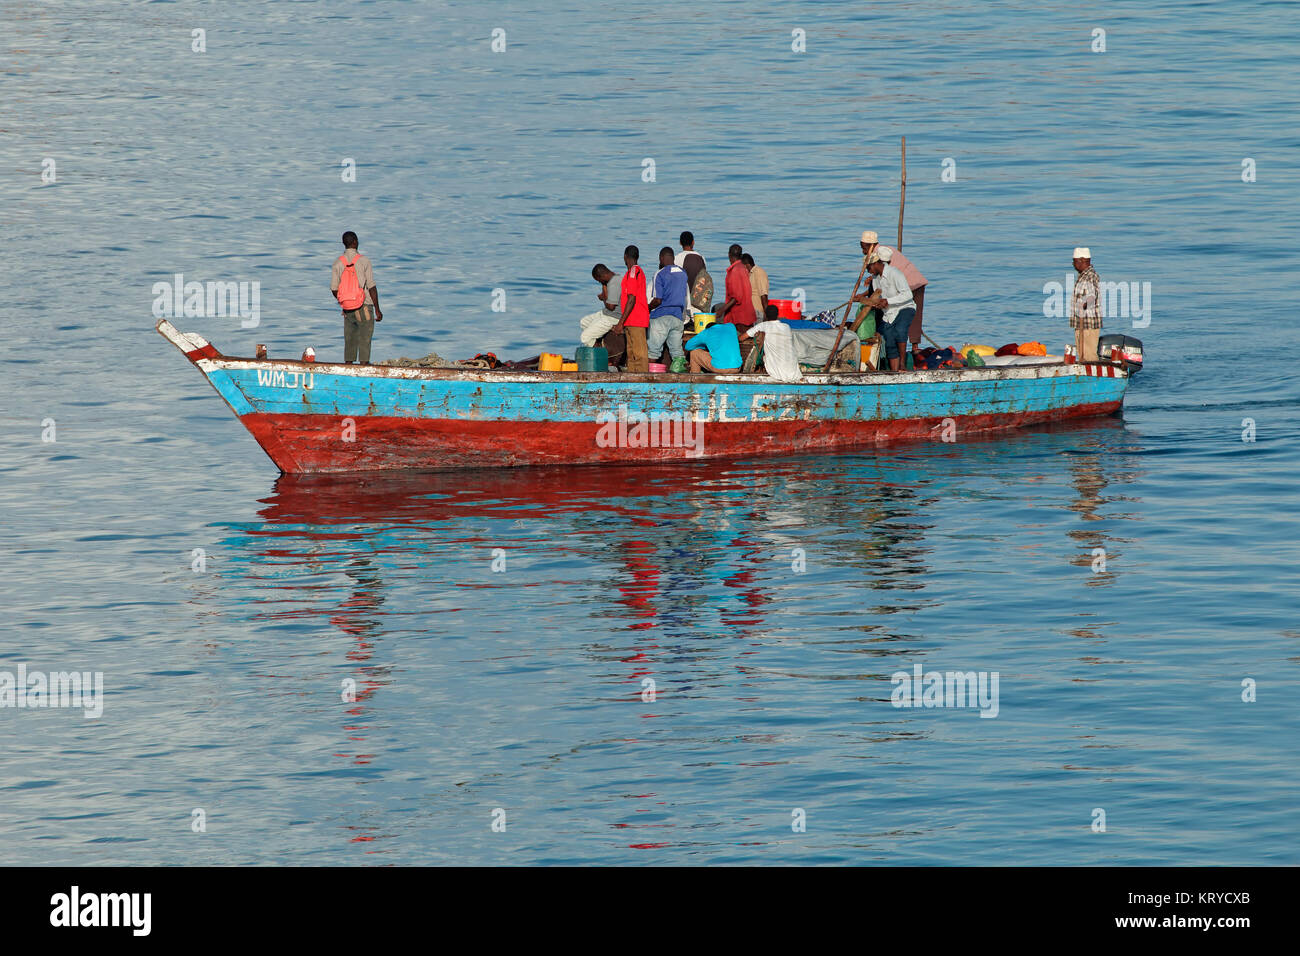 STONE TOWN, ZANZIBAR, TANZANIA - OCTOBER 31, 2014: Returning fishermen on a wooden fishing boat entering the Stone Town harbor Stock Photo